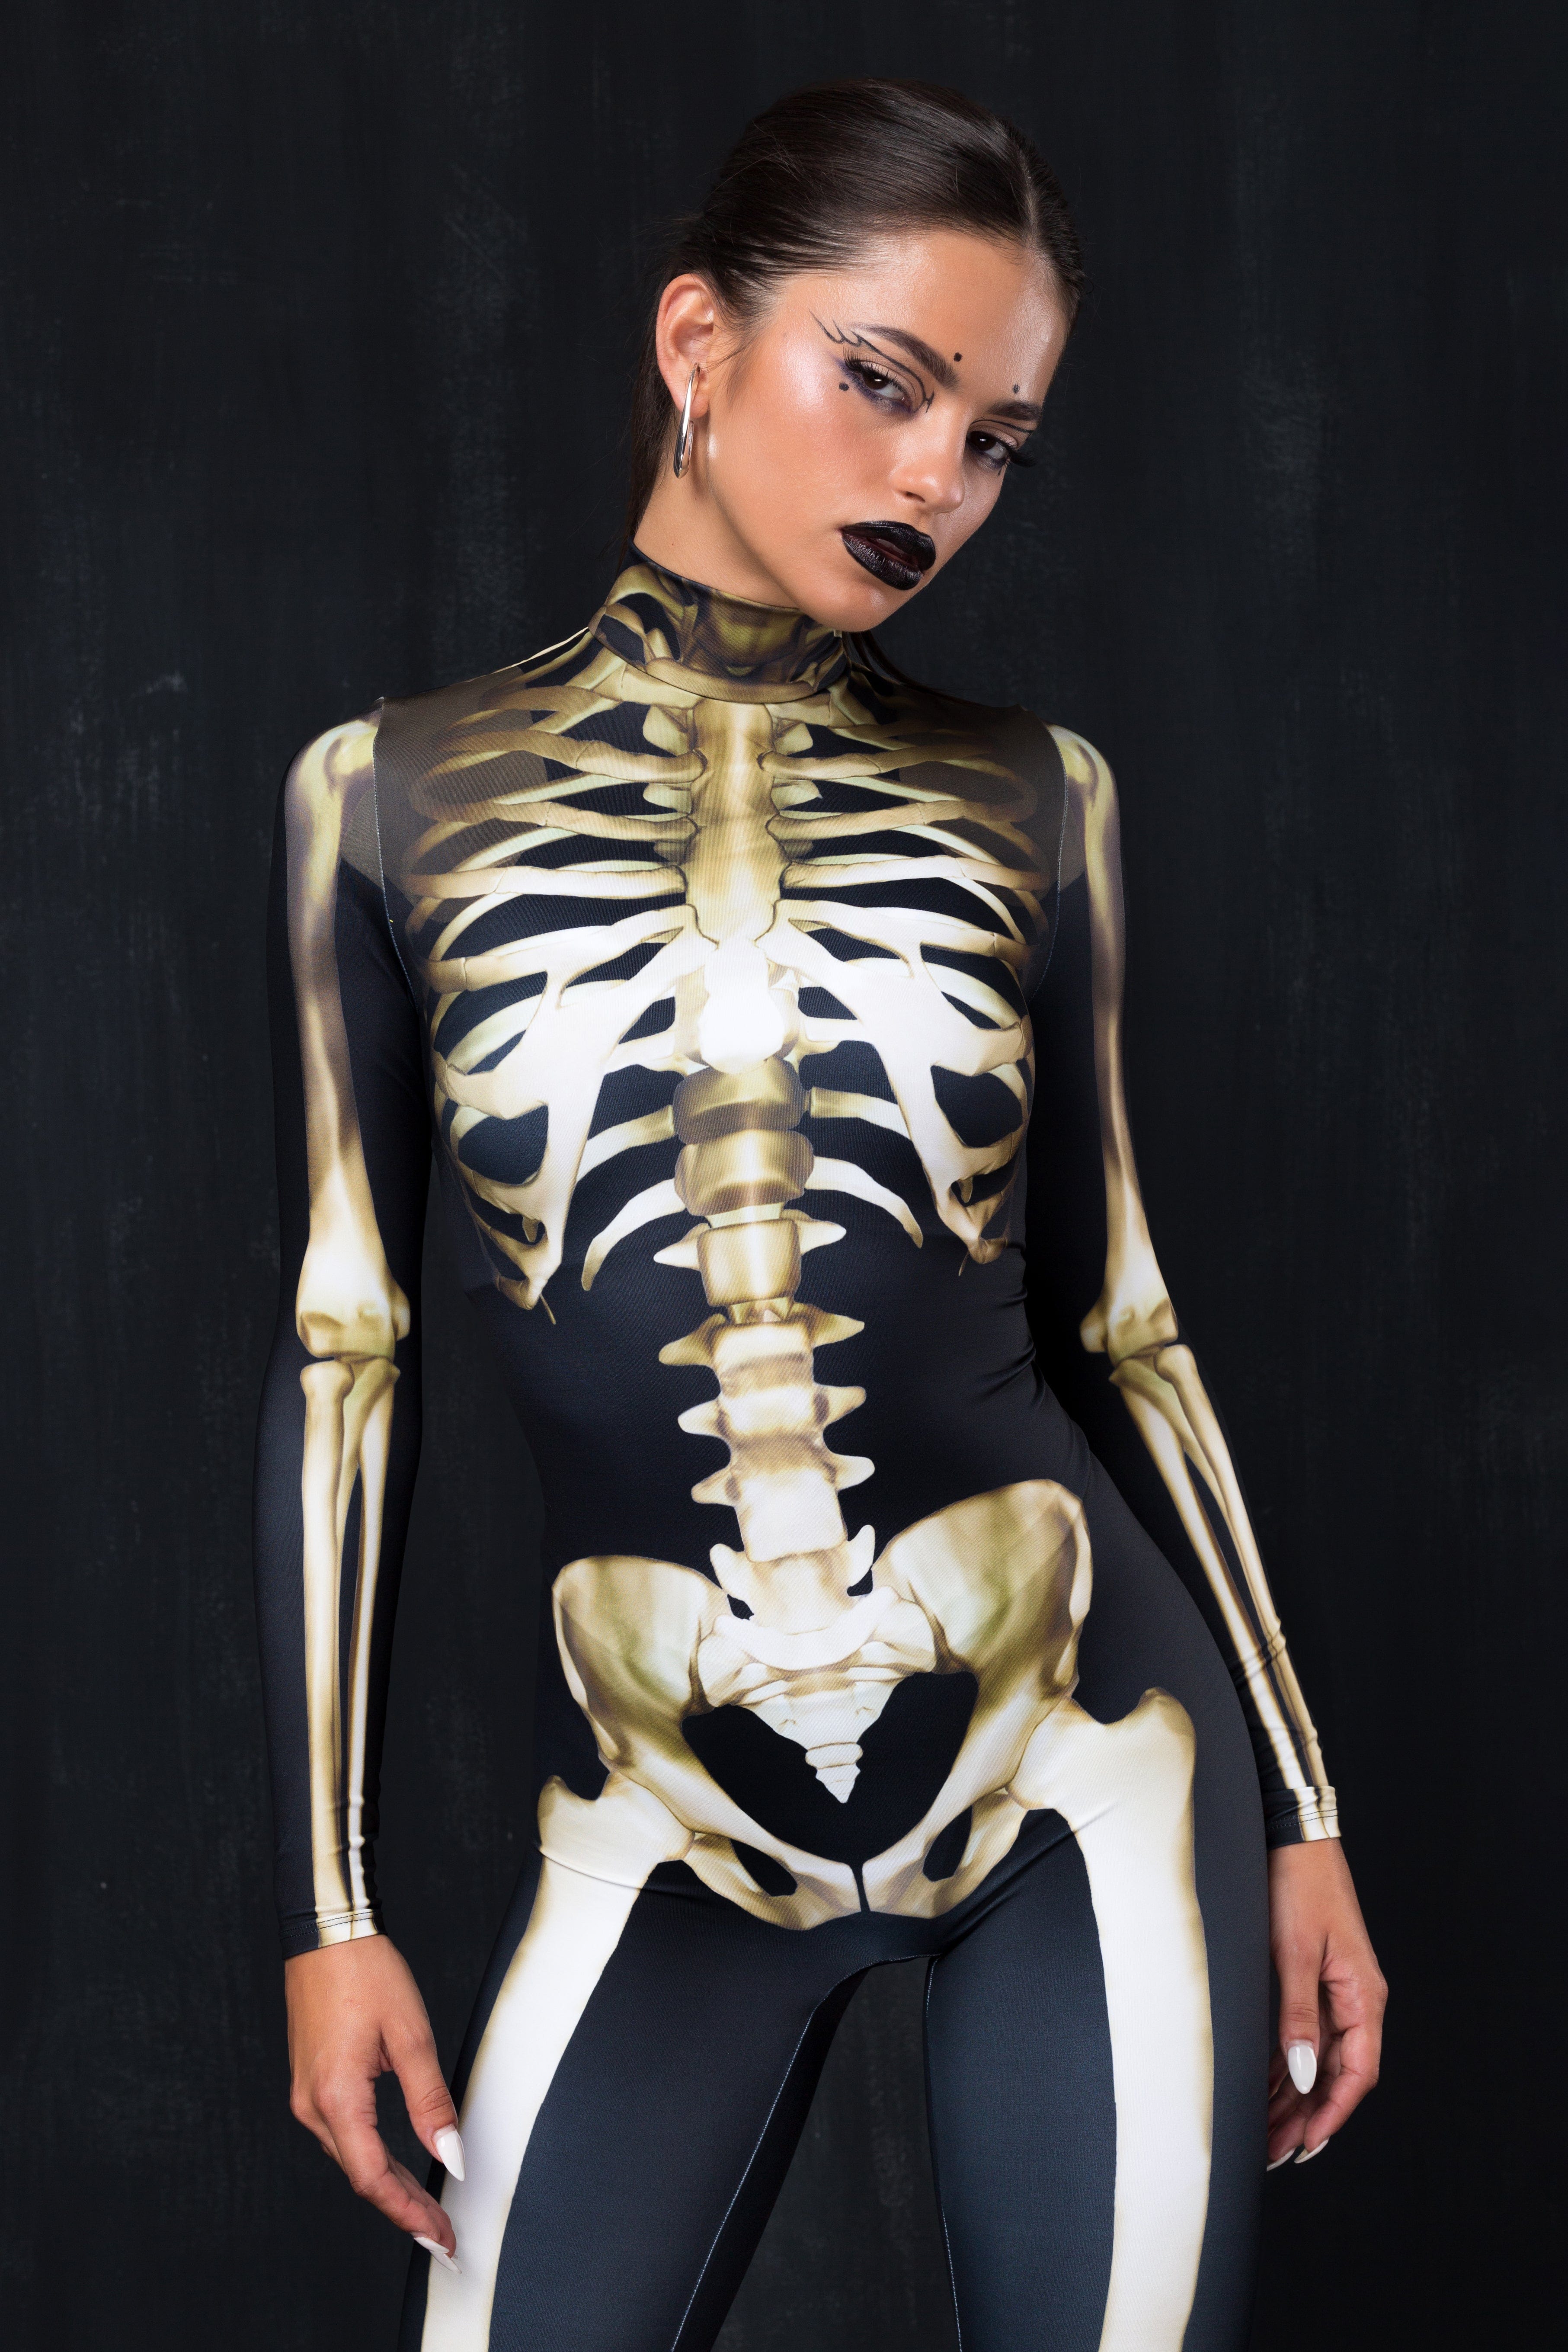 Graveyard Skeleton Costume